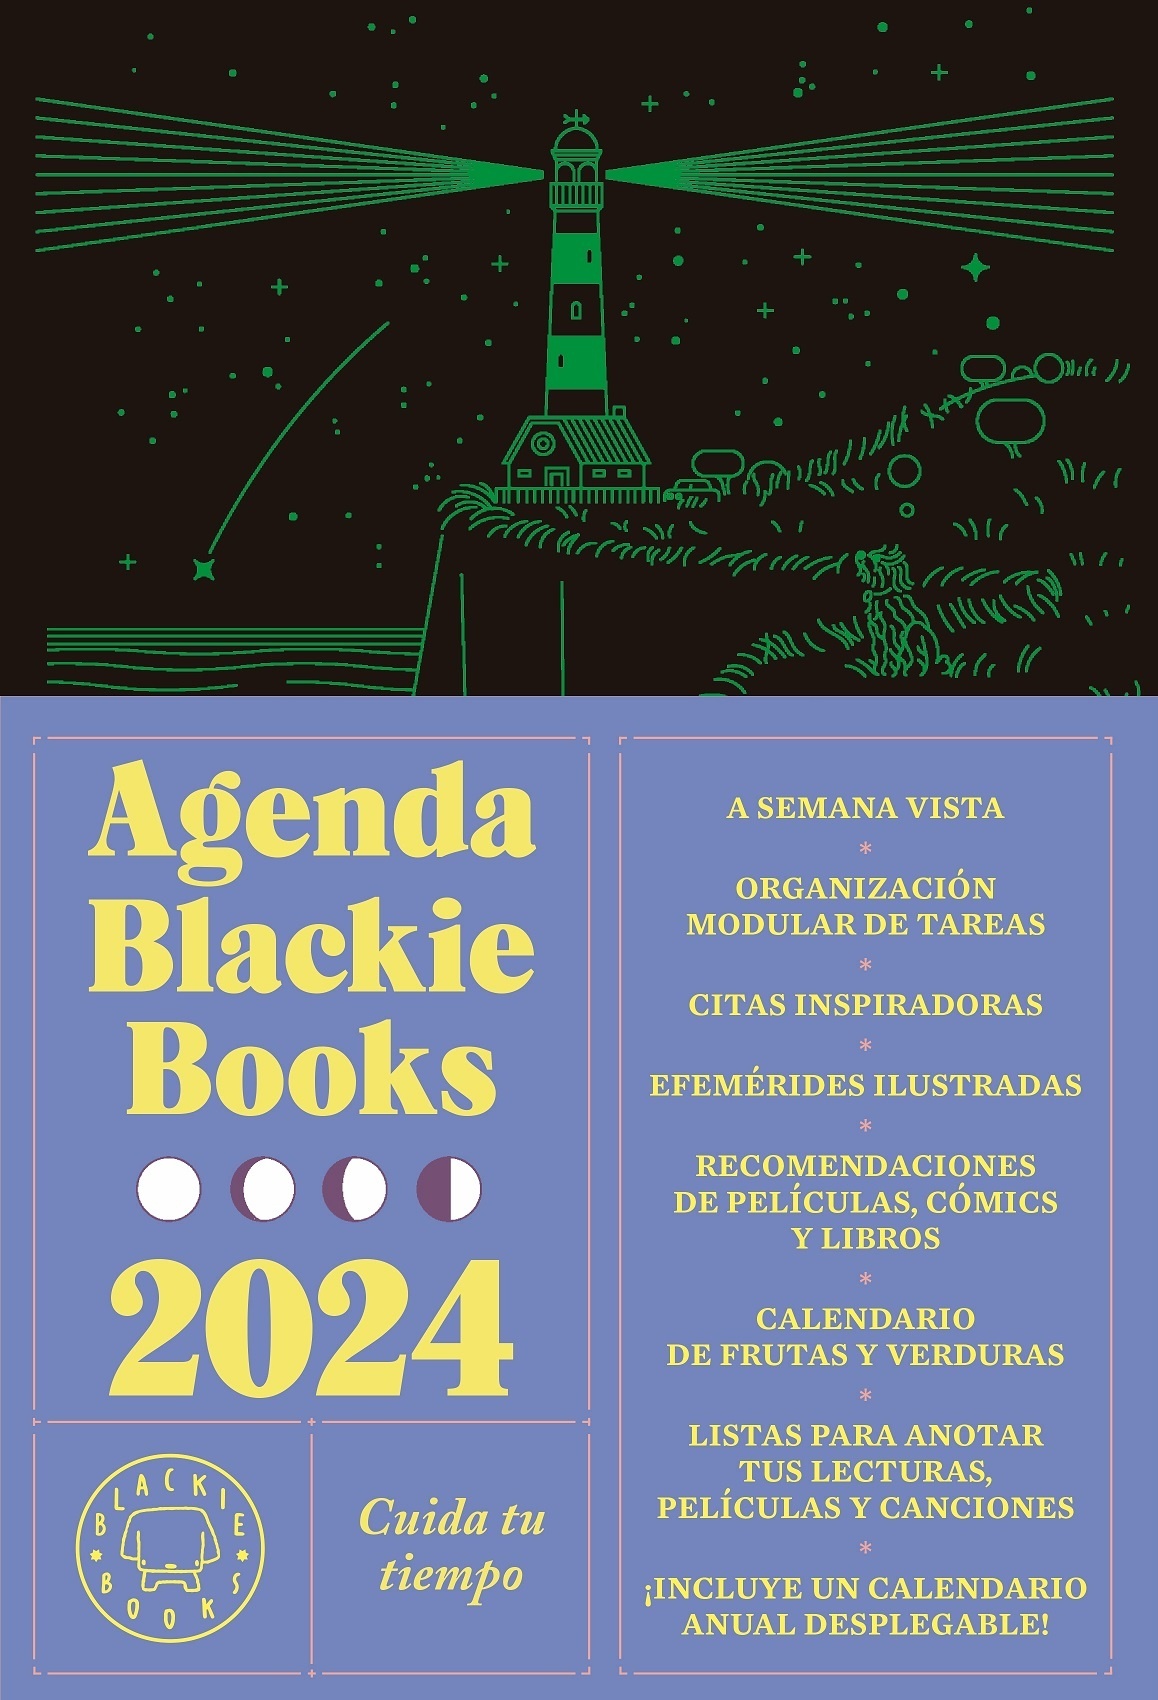 Agenda Blackie Books 2024 "Cuida tu tiempo". 